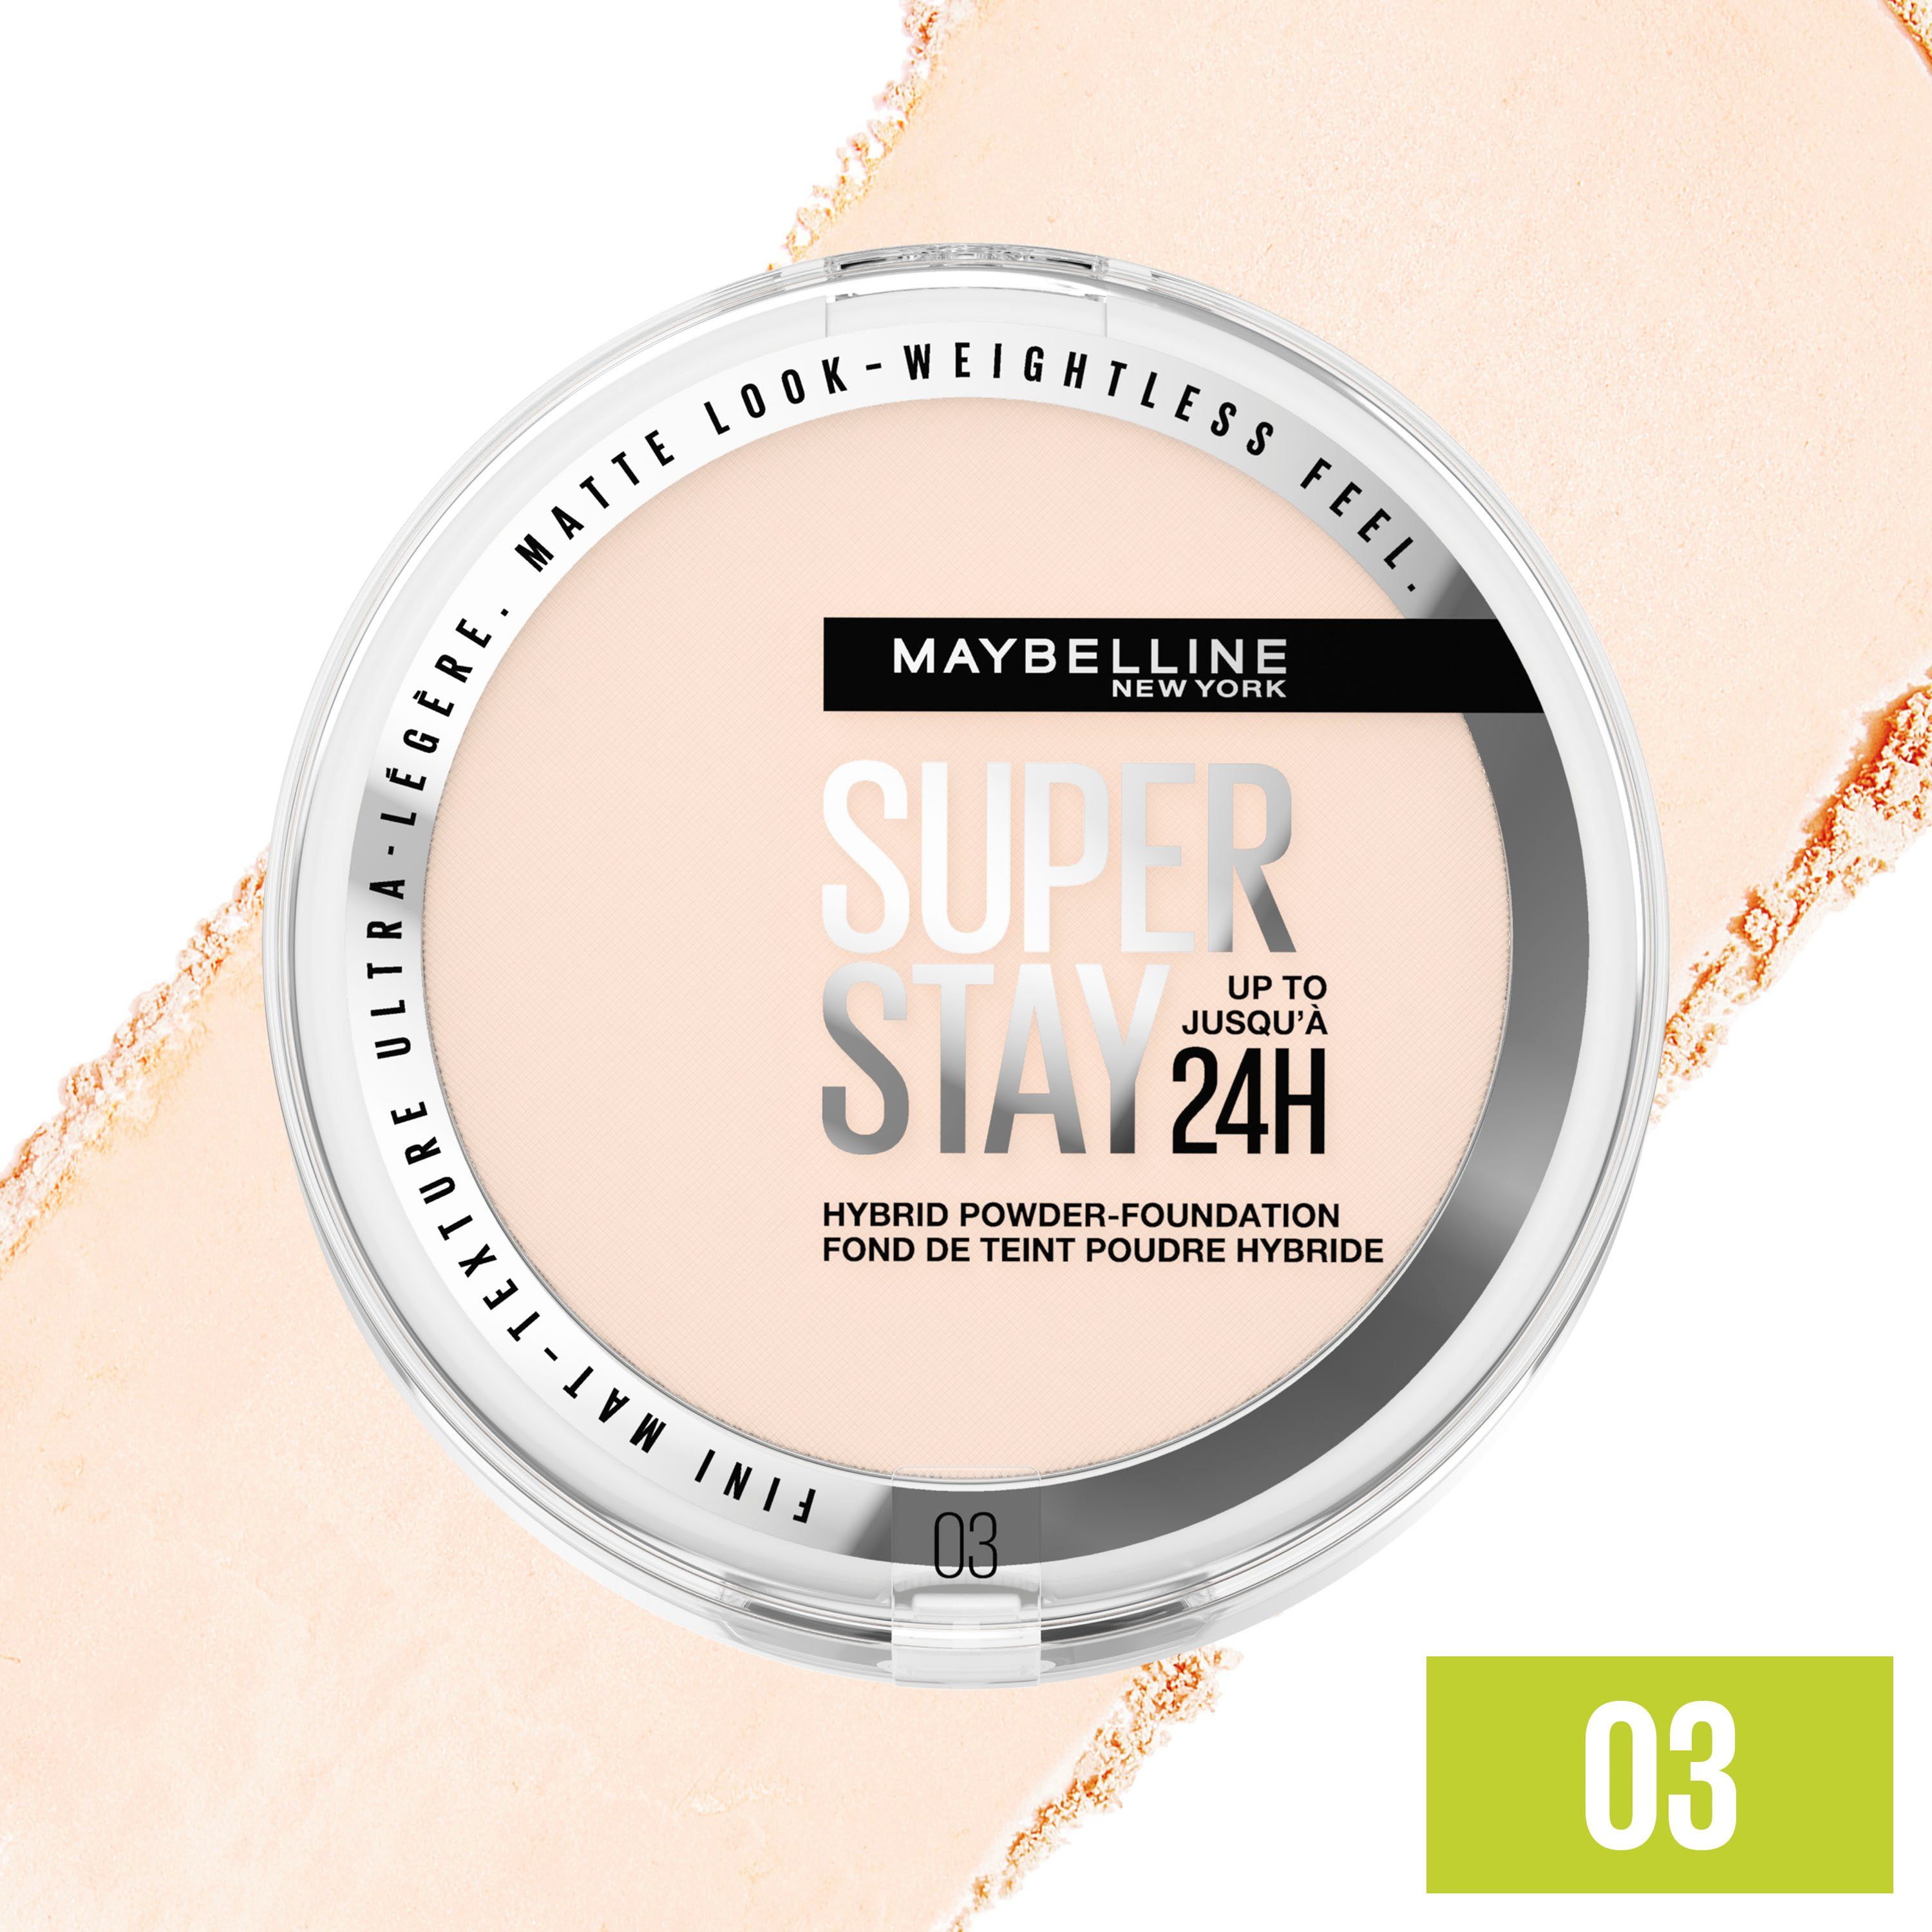 MAYBELLINE New Make-Up Maybelline Stay YORK Foundation Super Hybrides York Puder NEW